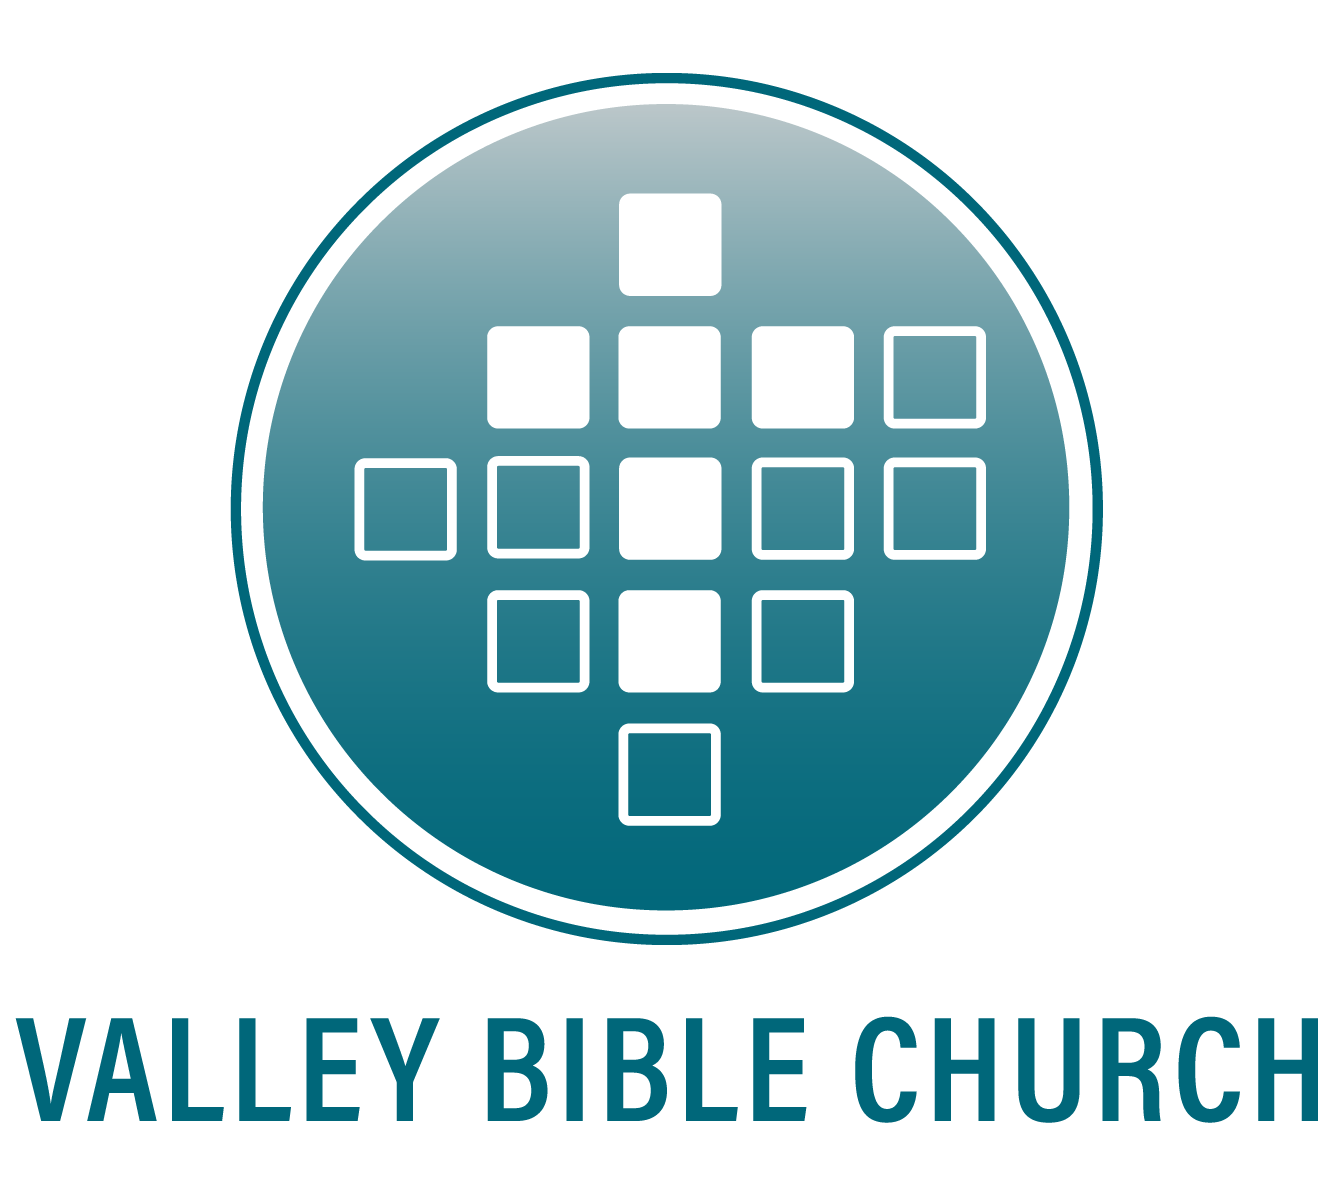 VALLEY BIBLE CHURCH